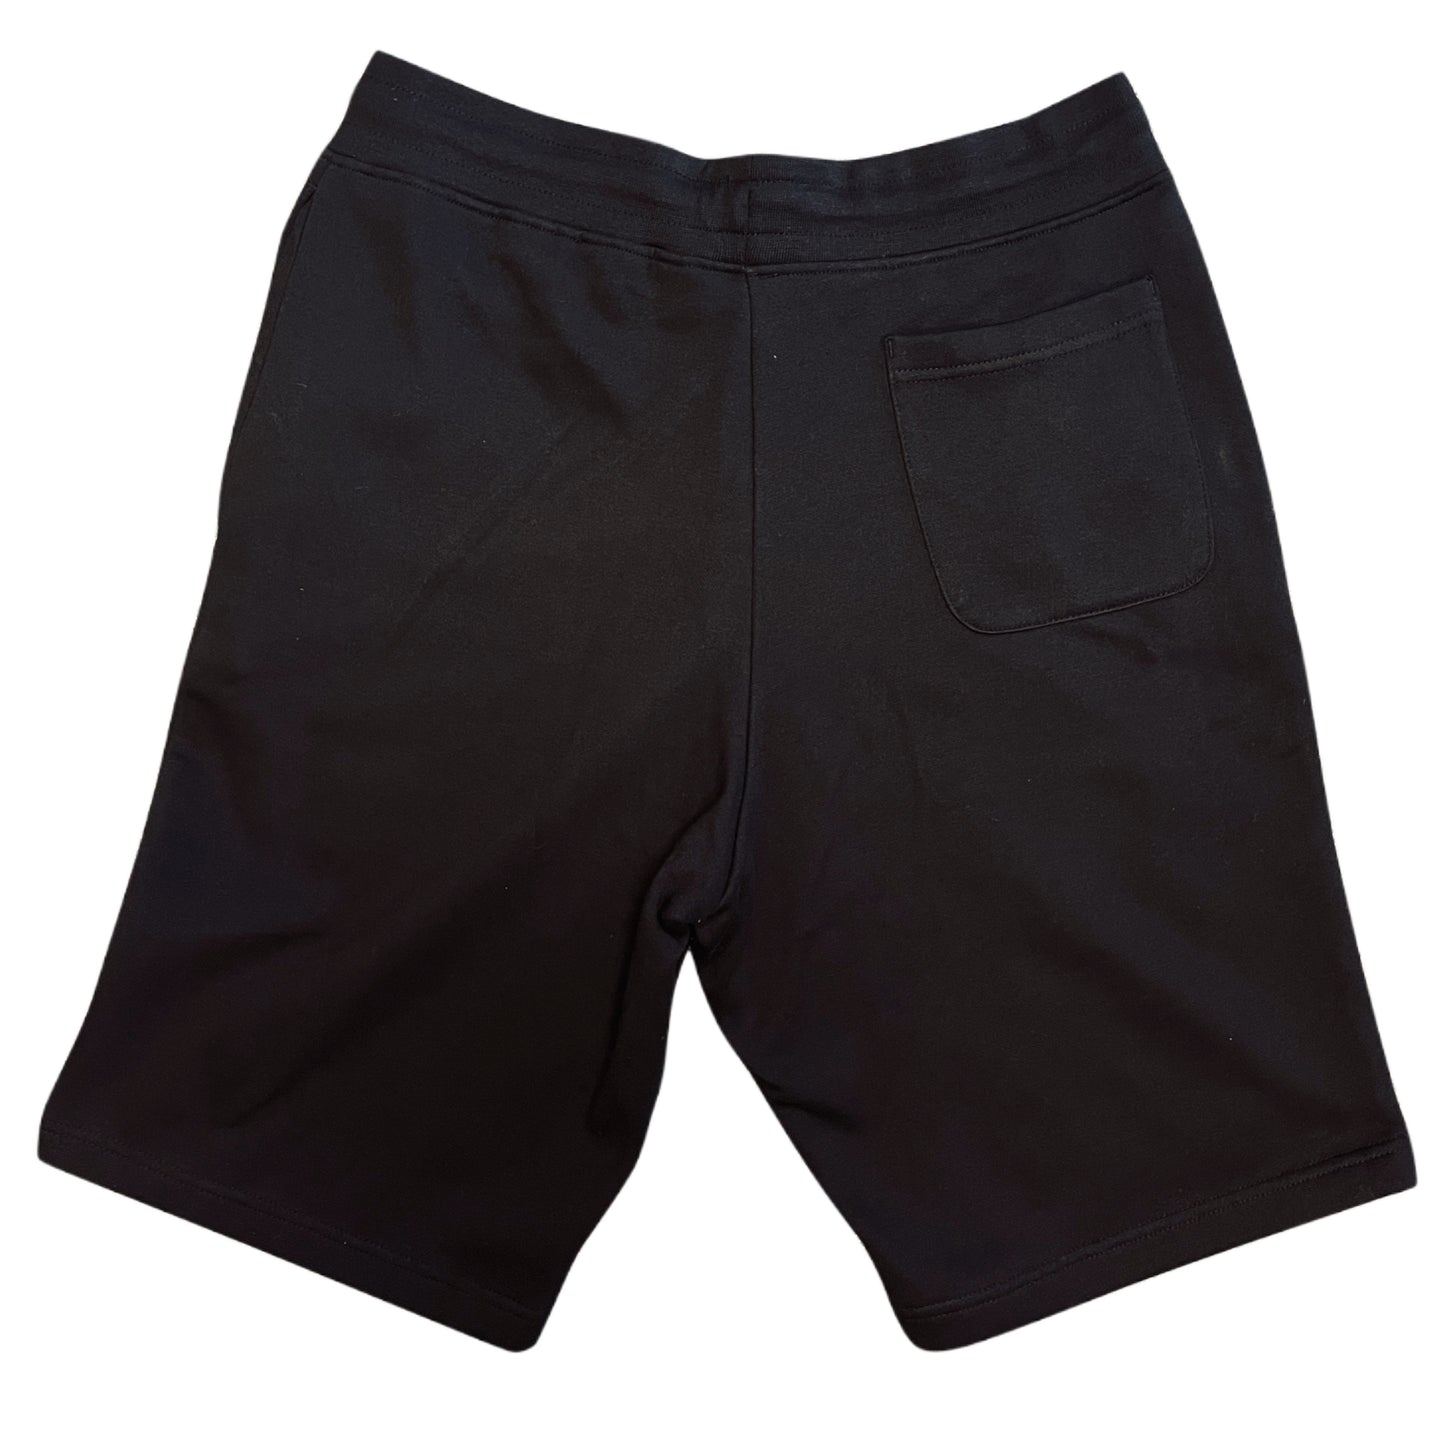 Men's Black Embroidered Fleece Shorts